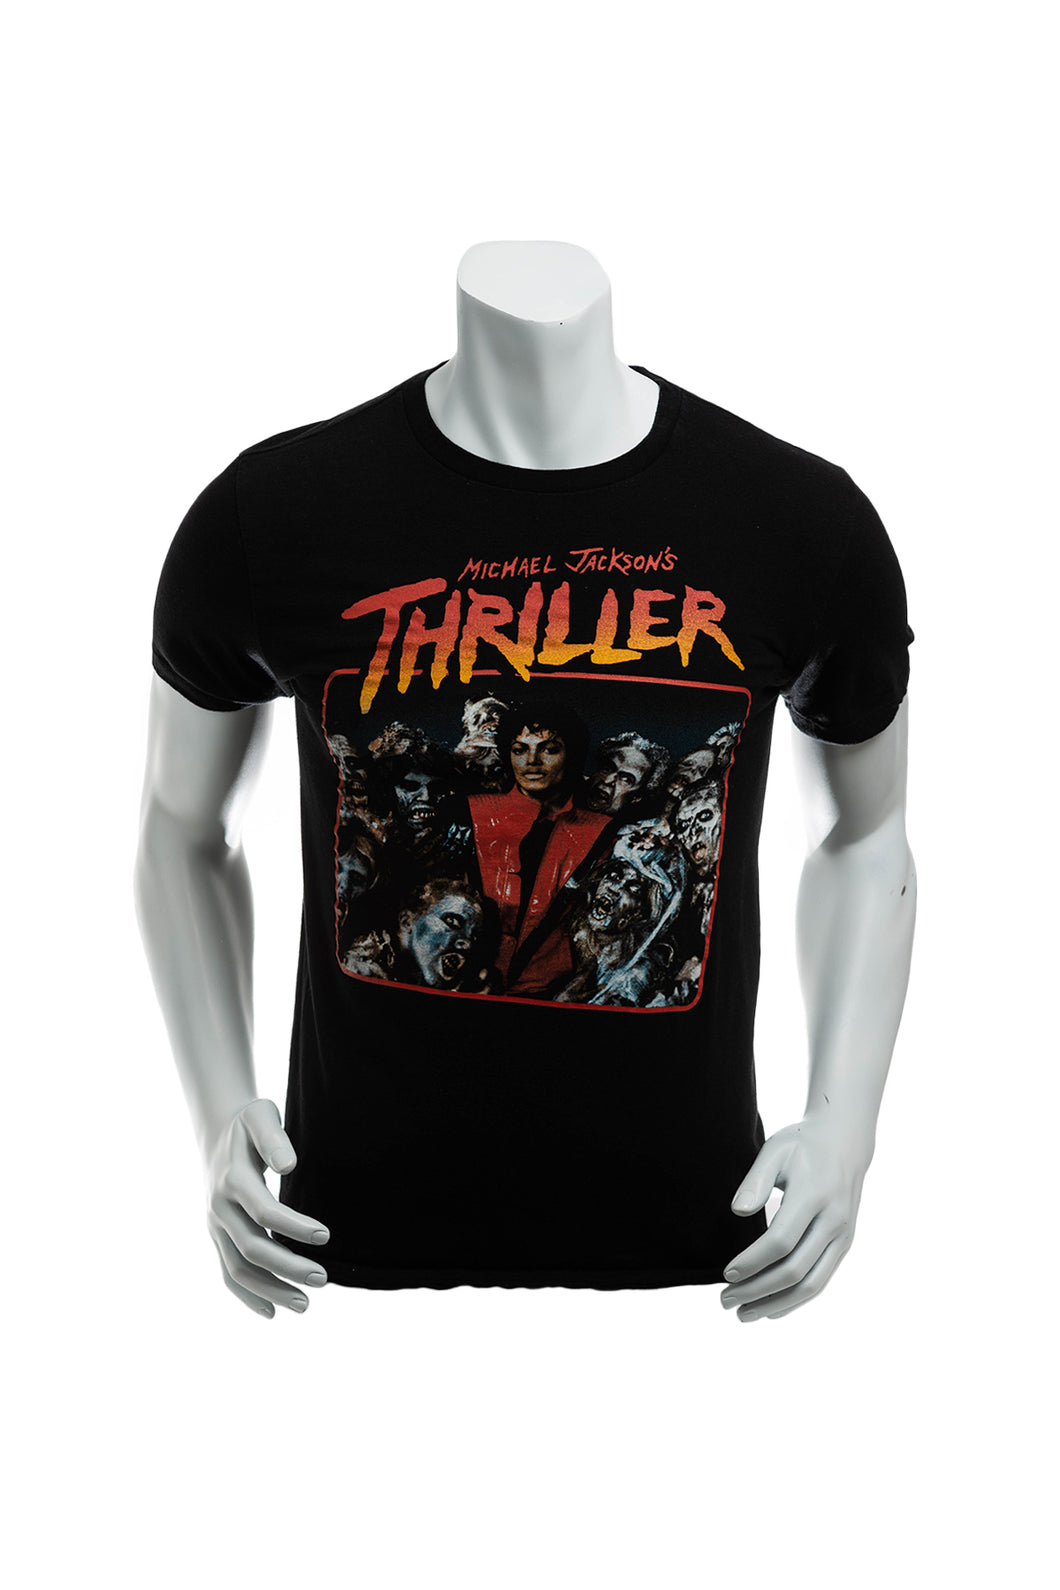 Michael Jackson's Thriller T-Shirt Men's Small